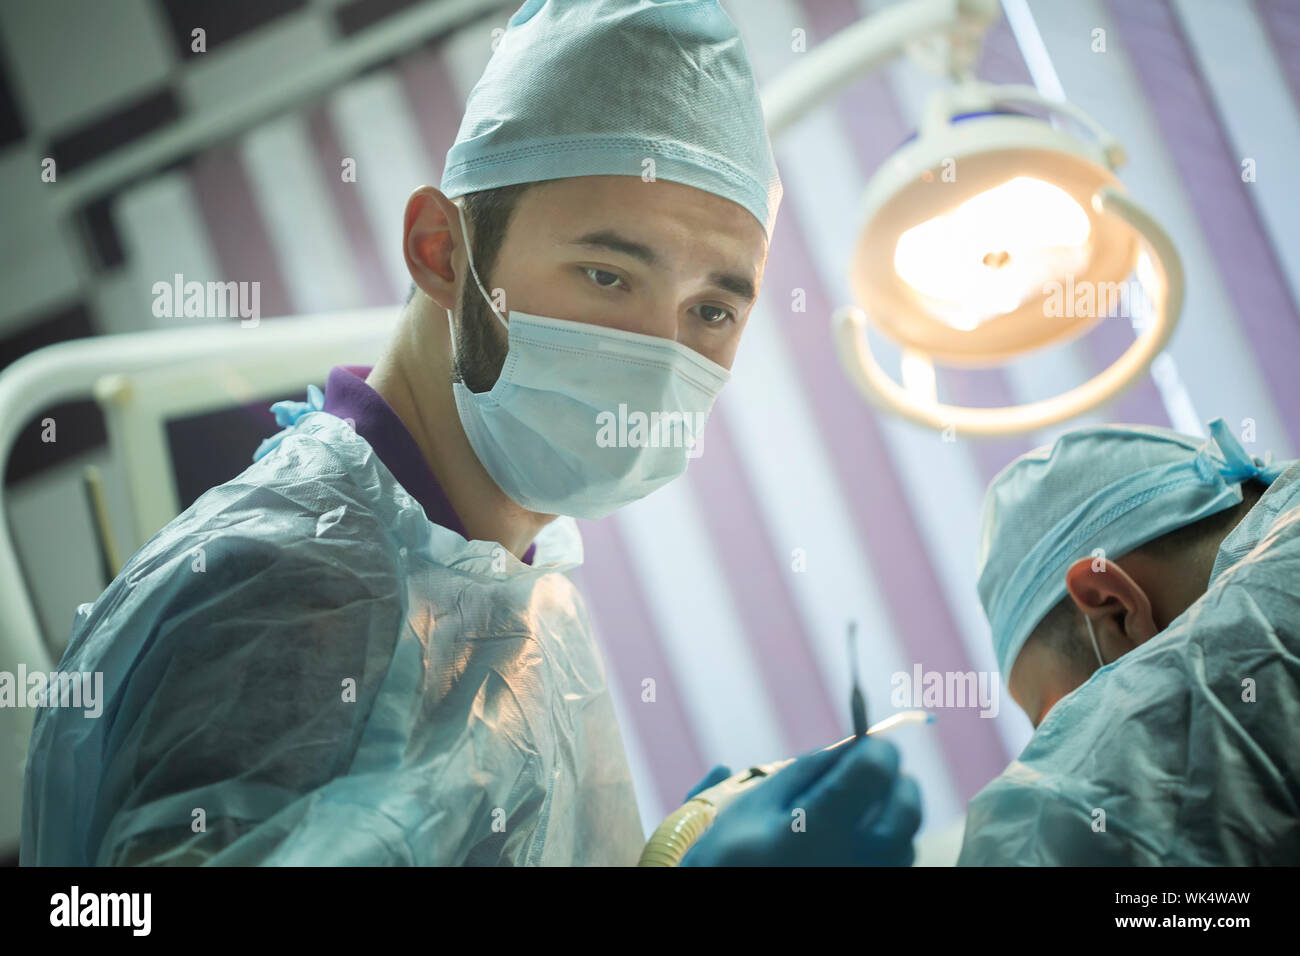 Doctors making dental surgery. Dental clinic manipulation Stock Photo